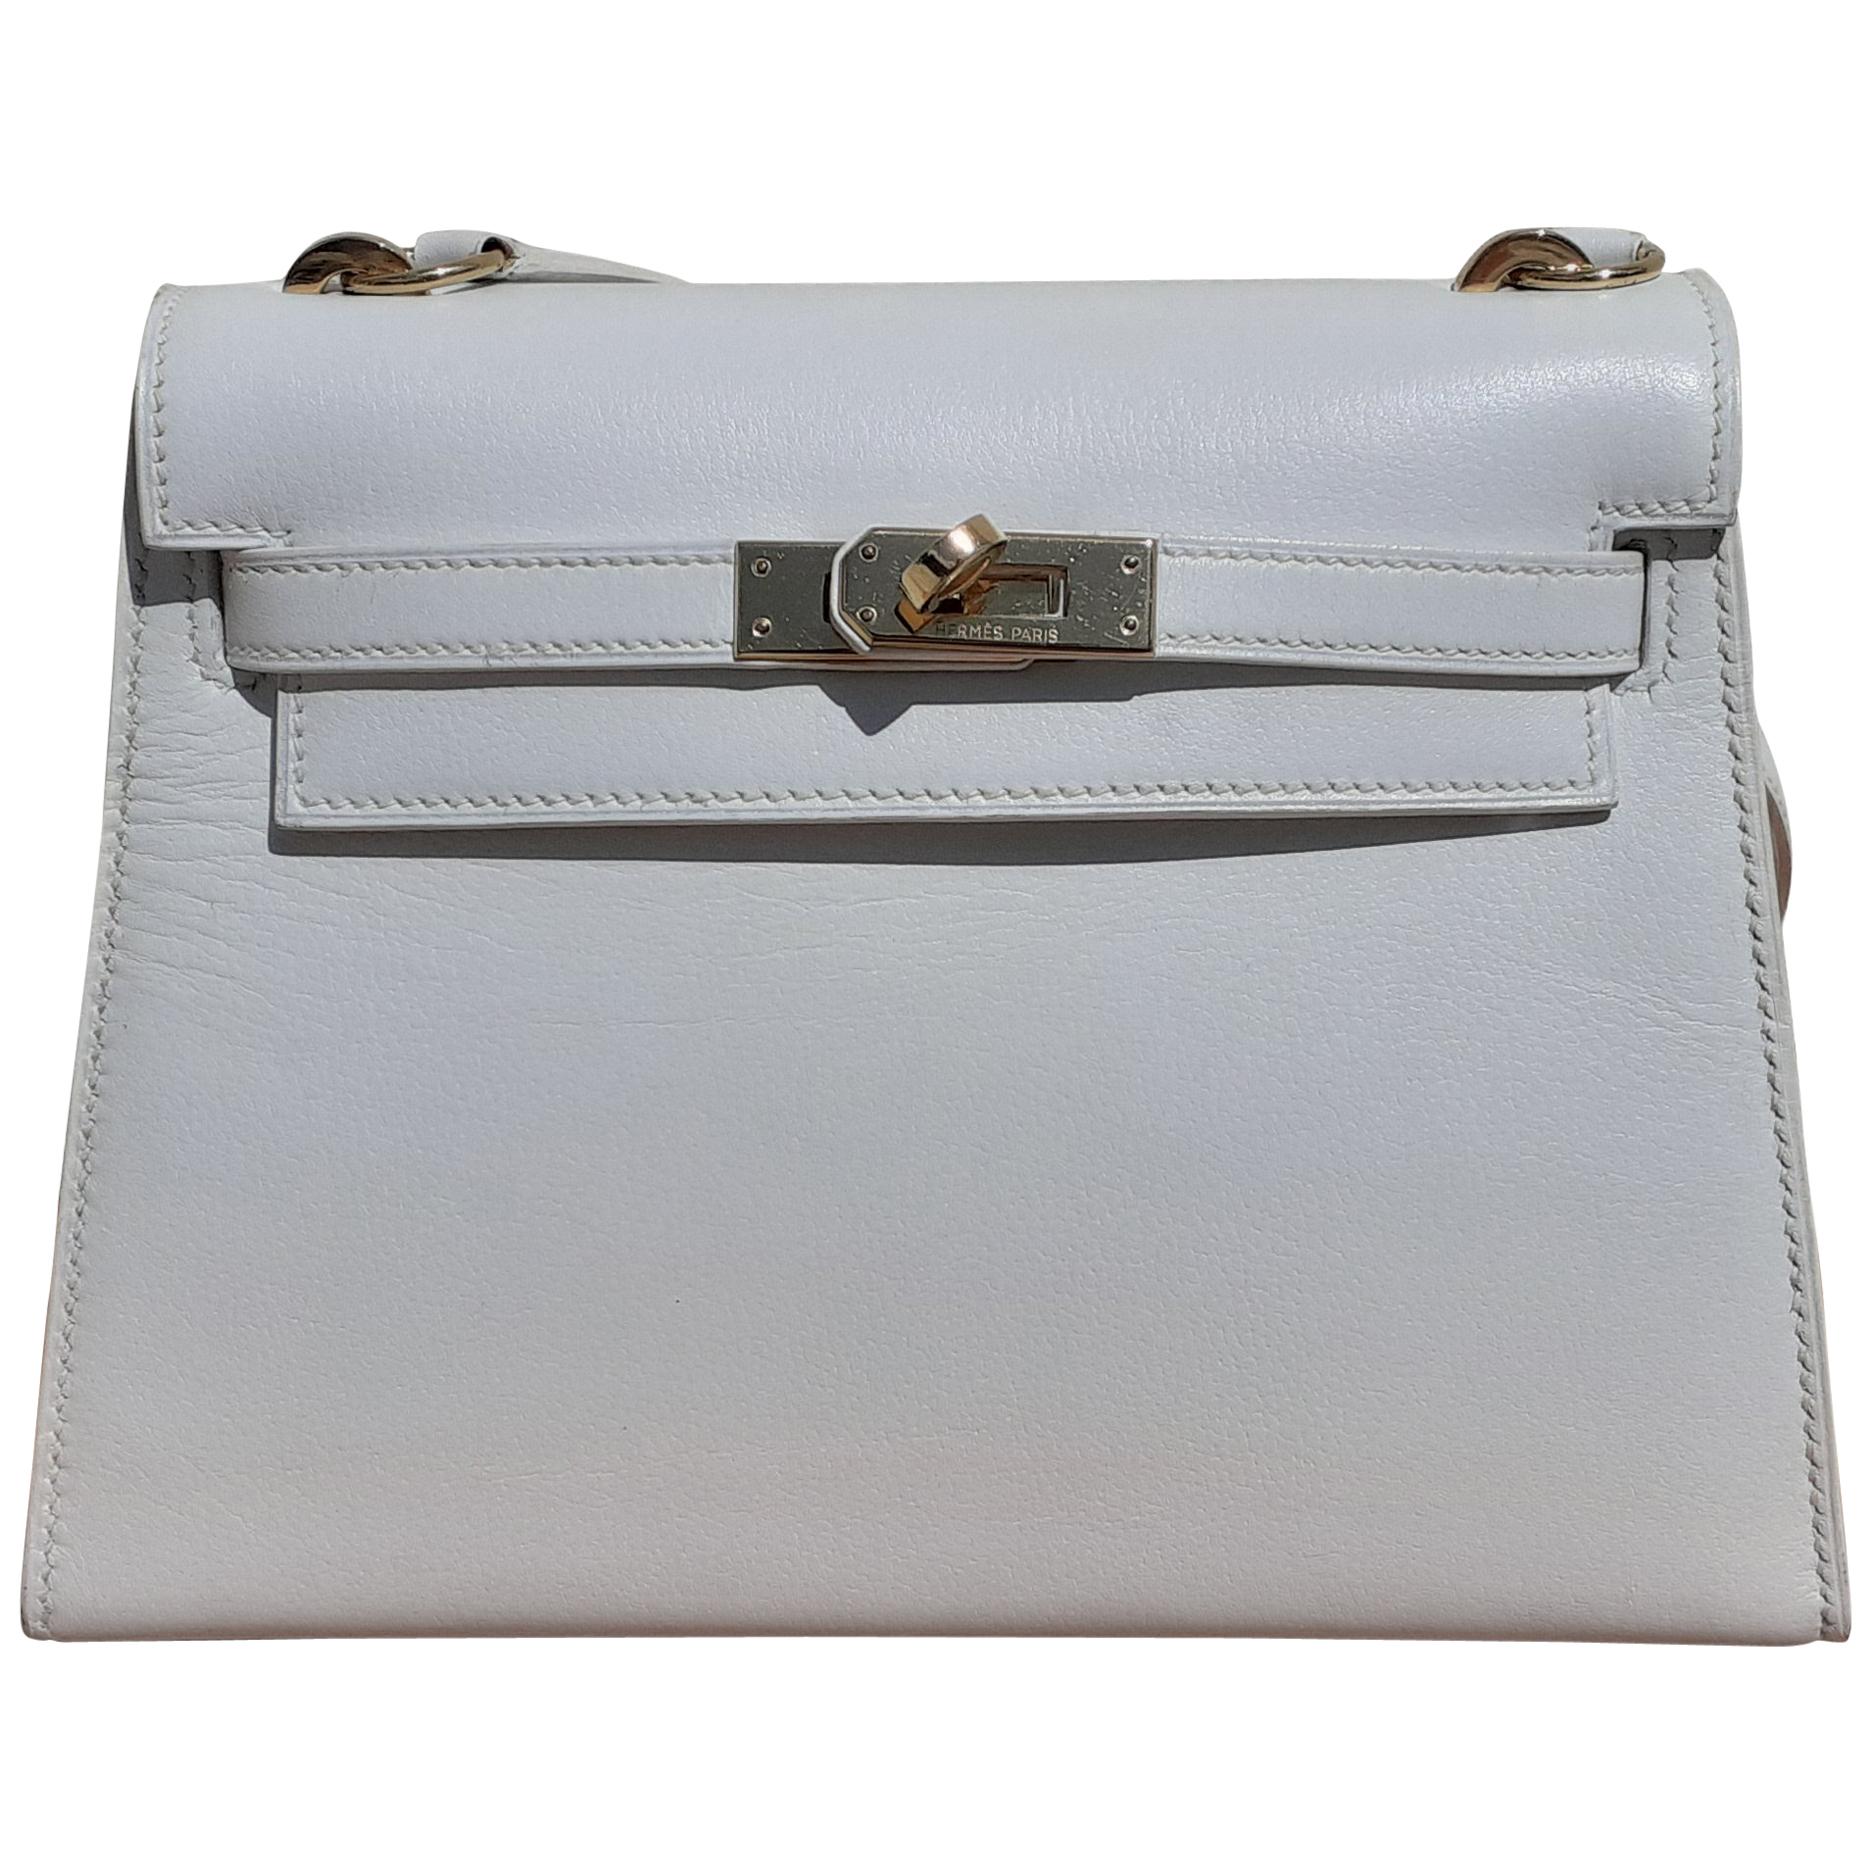 Hermès Vintage Mini Kelly Bag Sellier White Leather Ghw Cross body 20 cm Rare